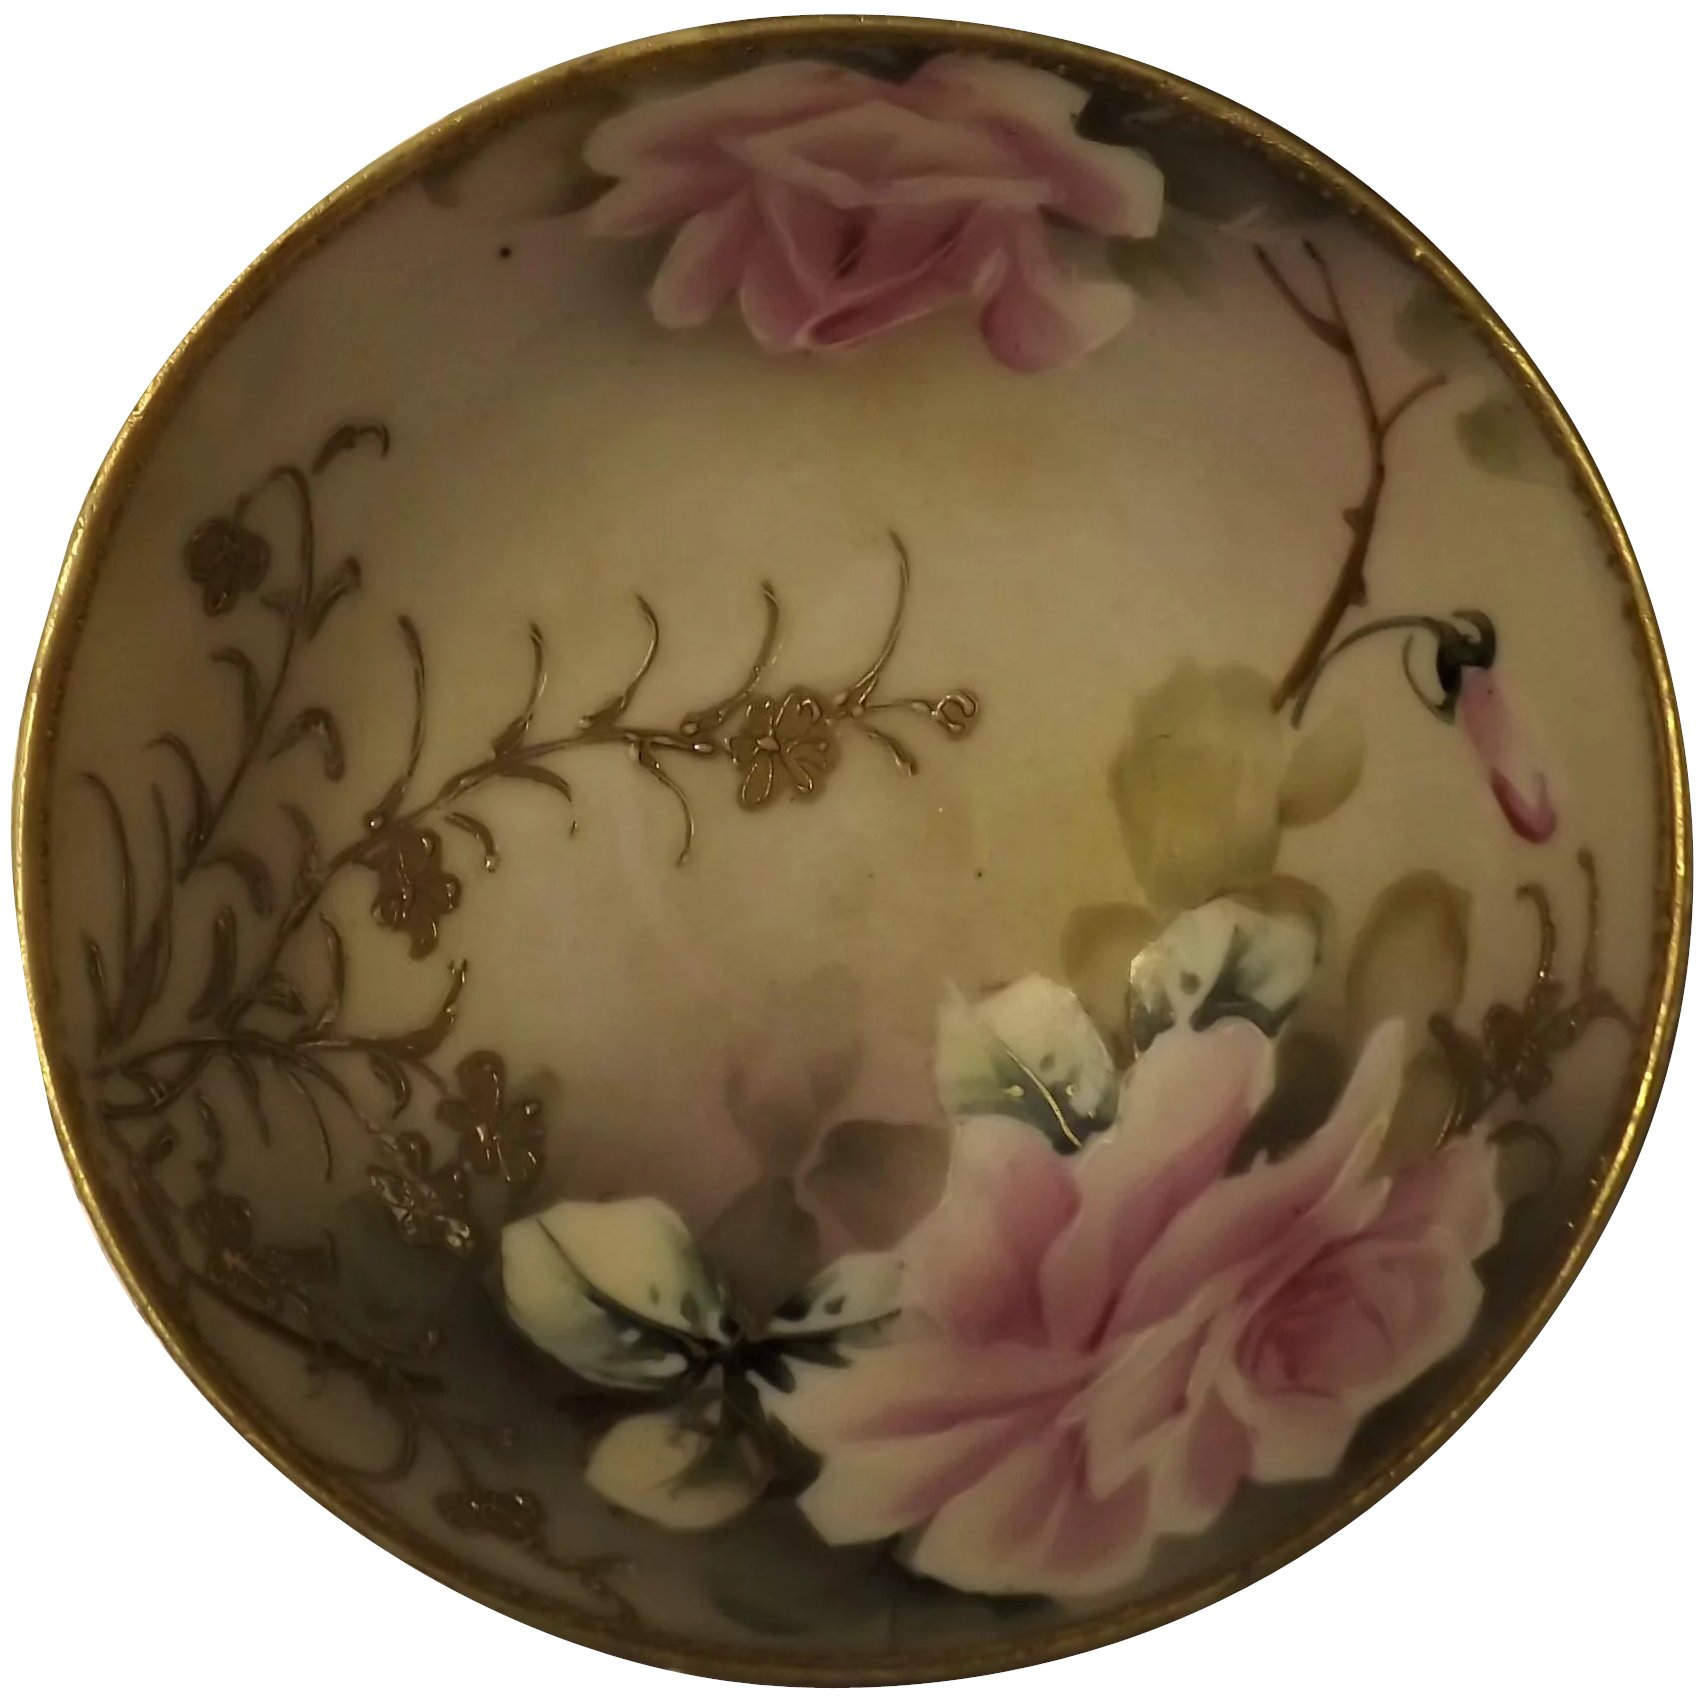 Japanese Porcelain Bowl - I.E. & C. Mark Circa 1900 - 1910